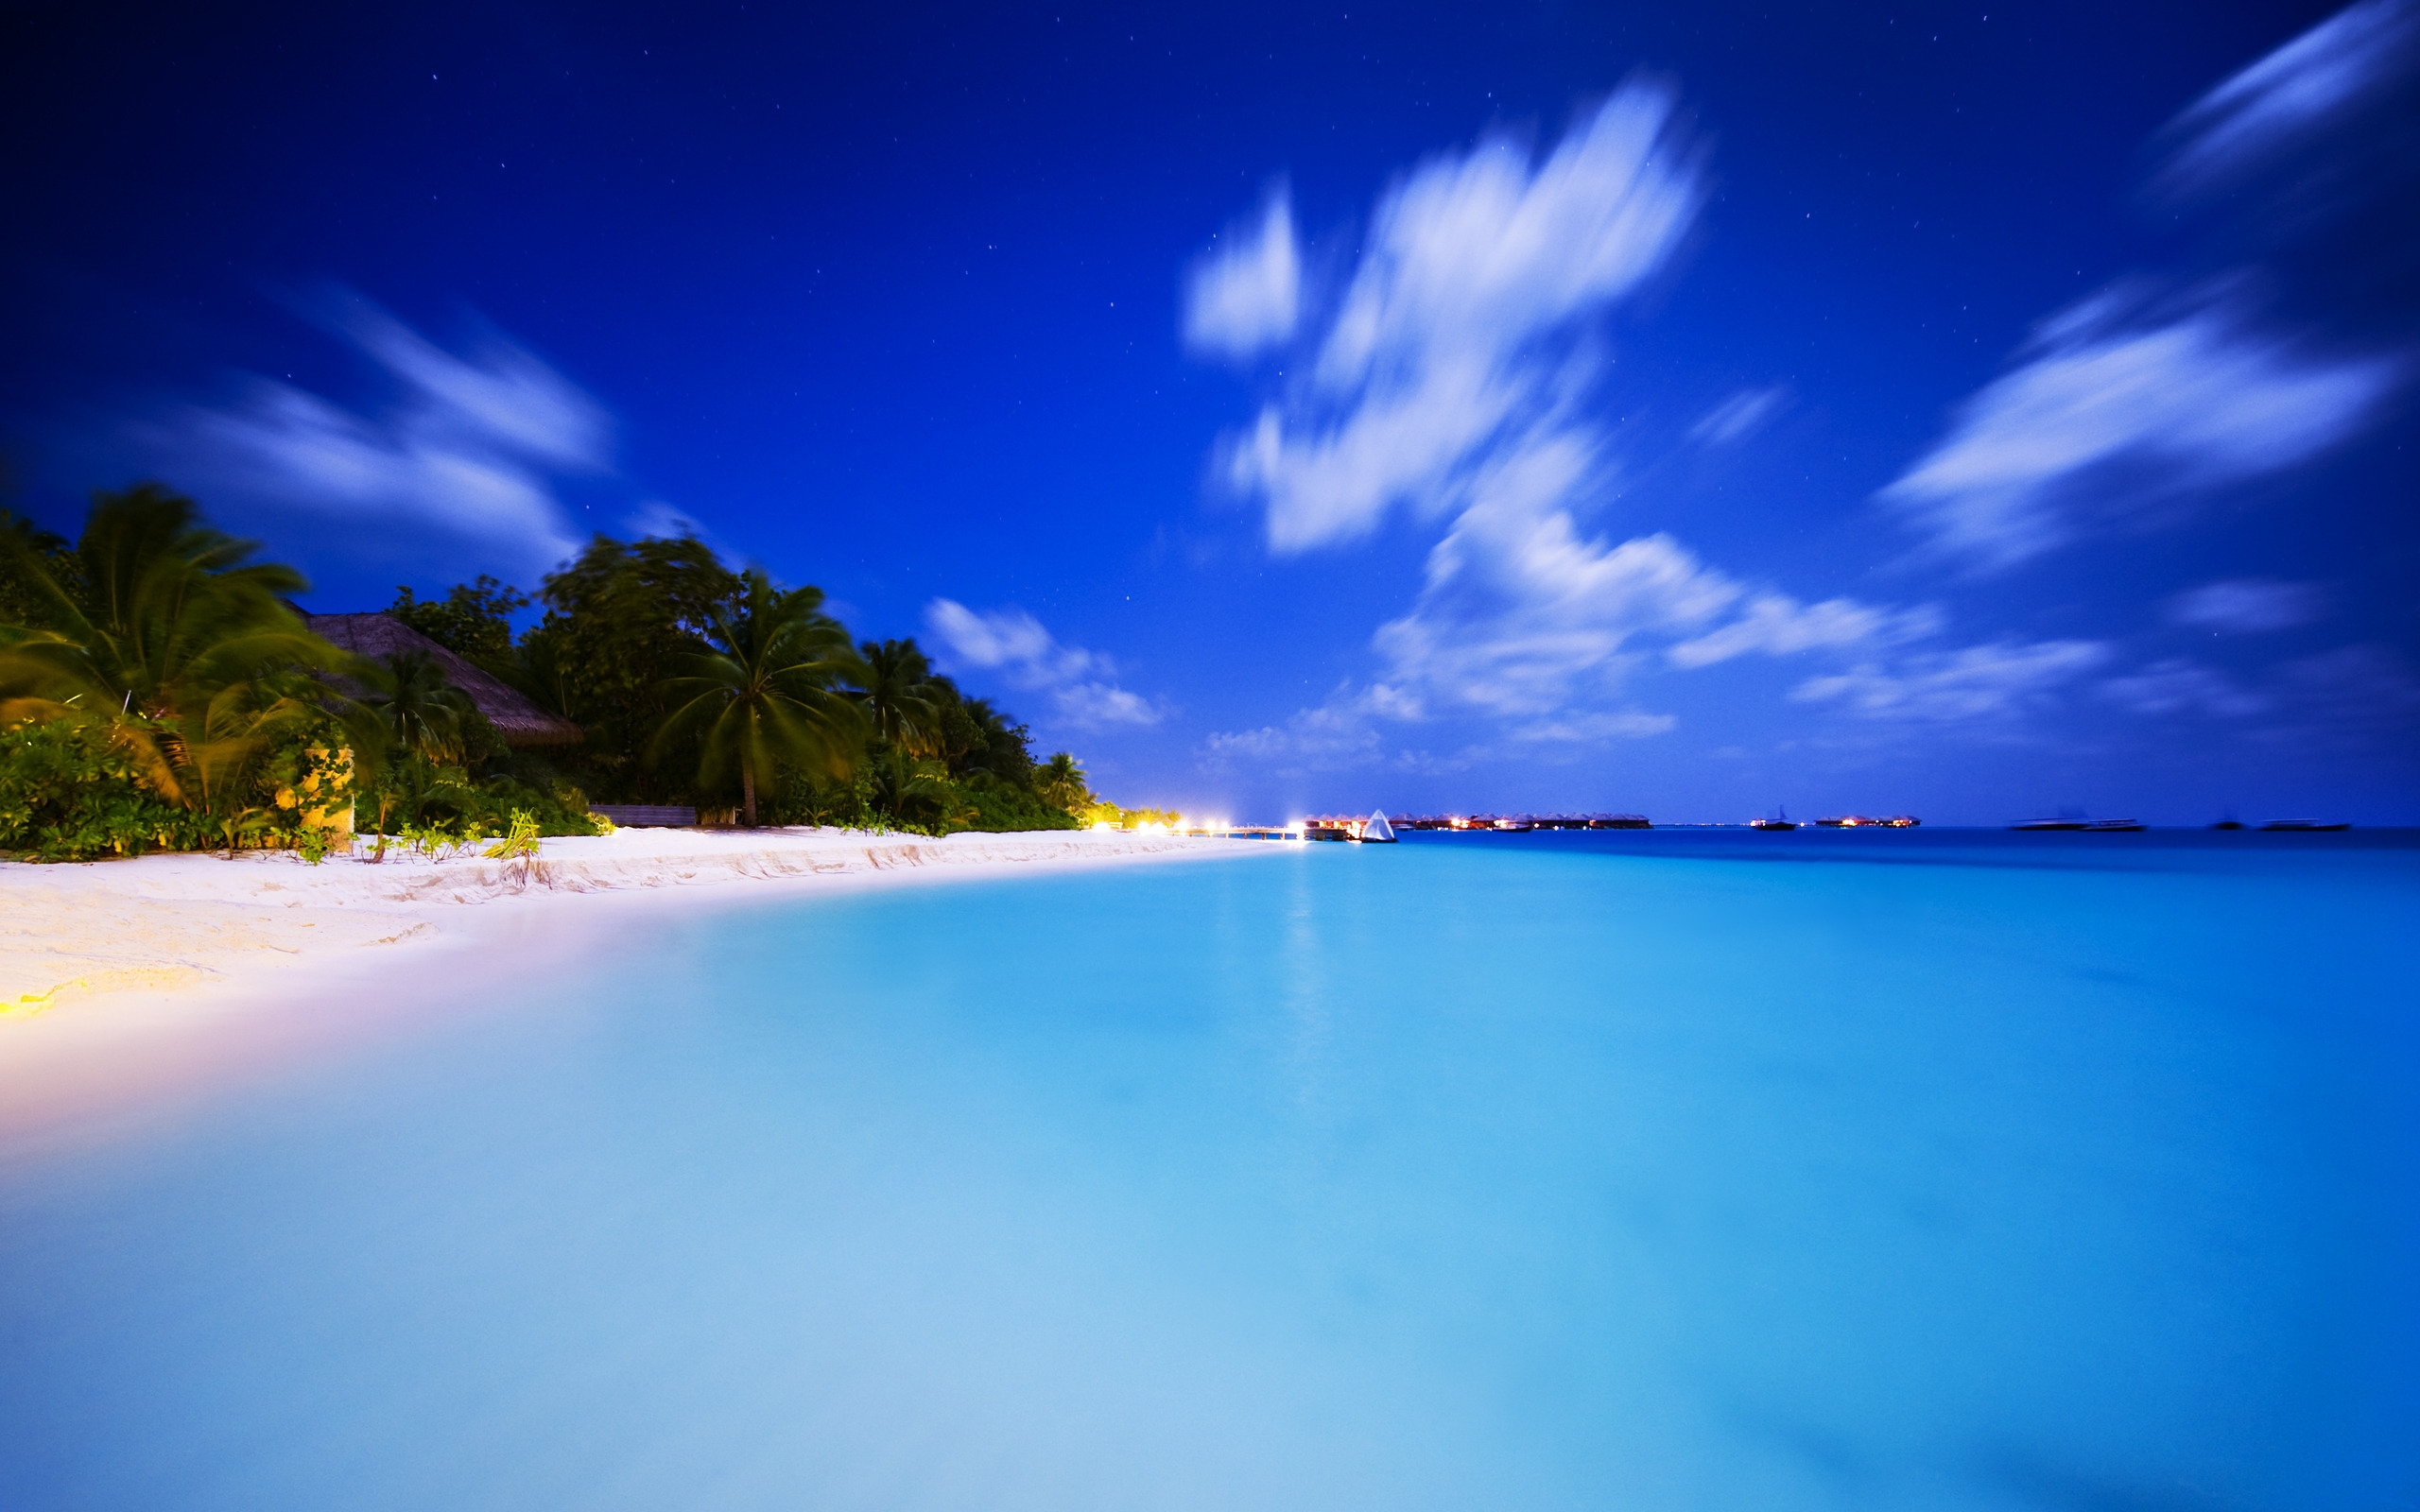 Maldivian Night for 2560 x 1600 widescreen resolution